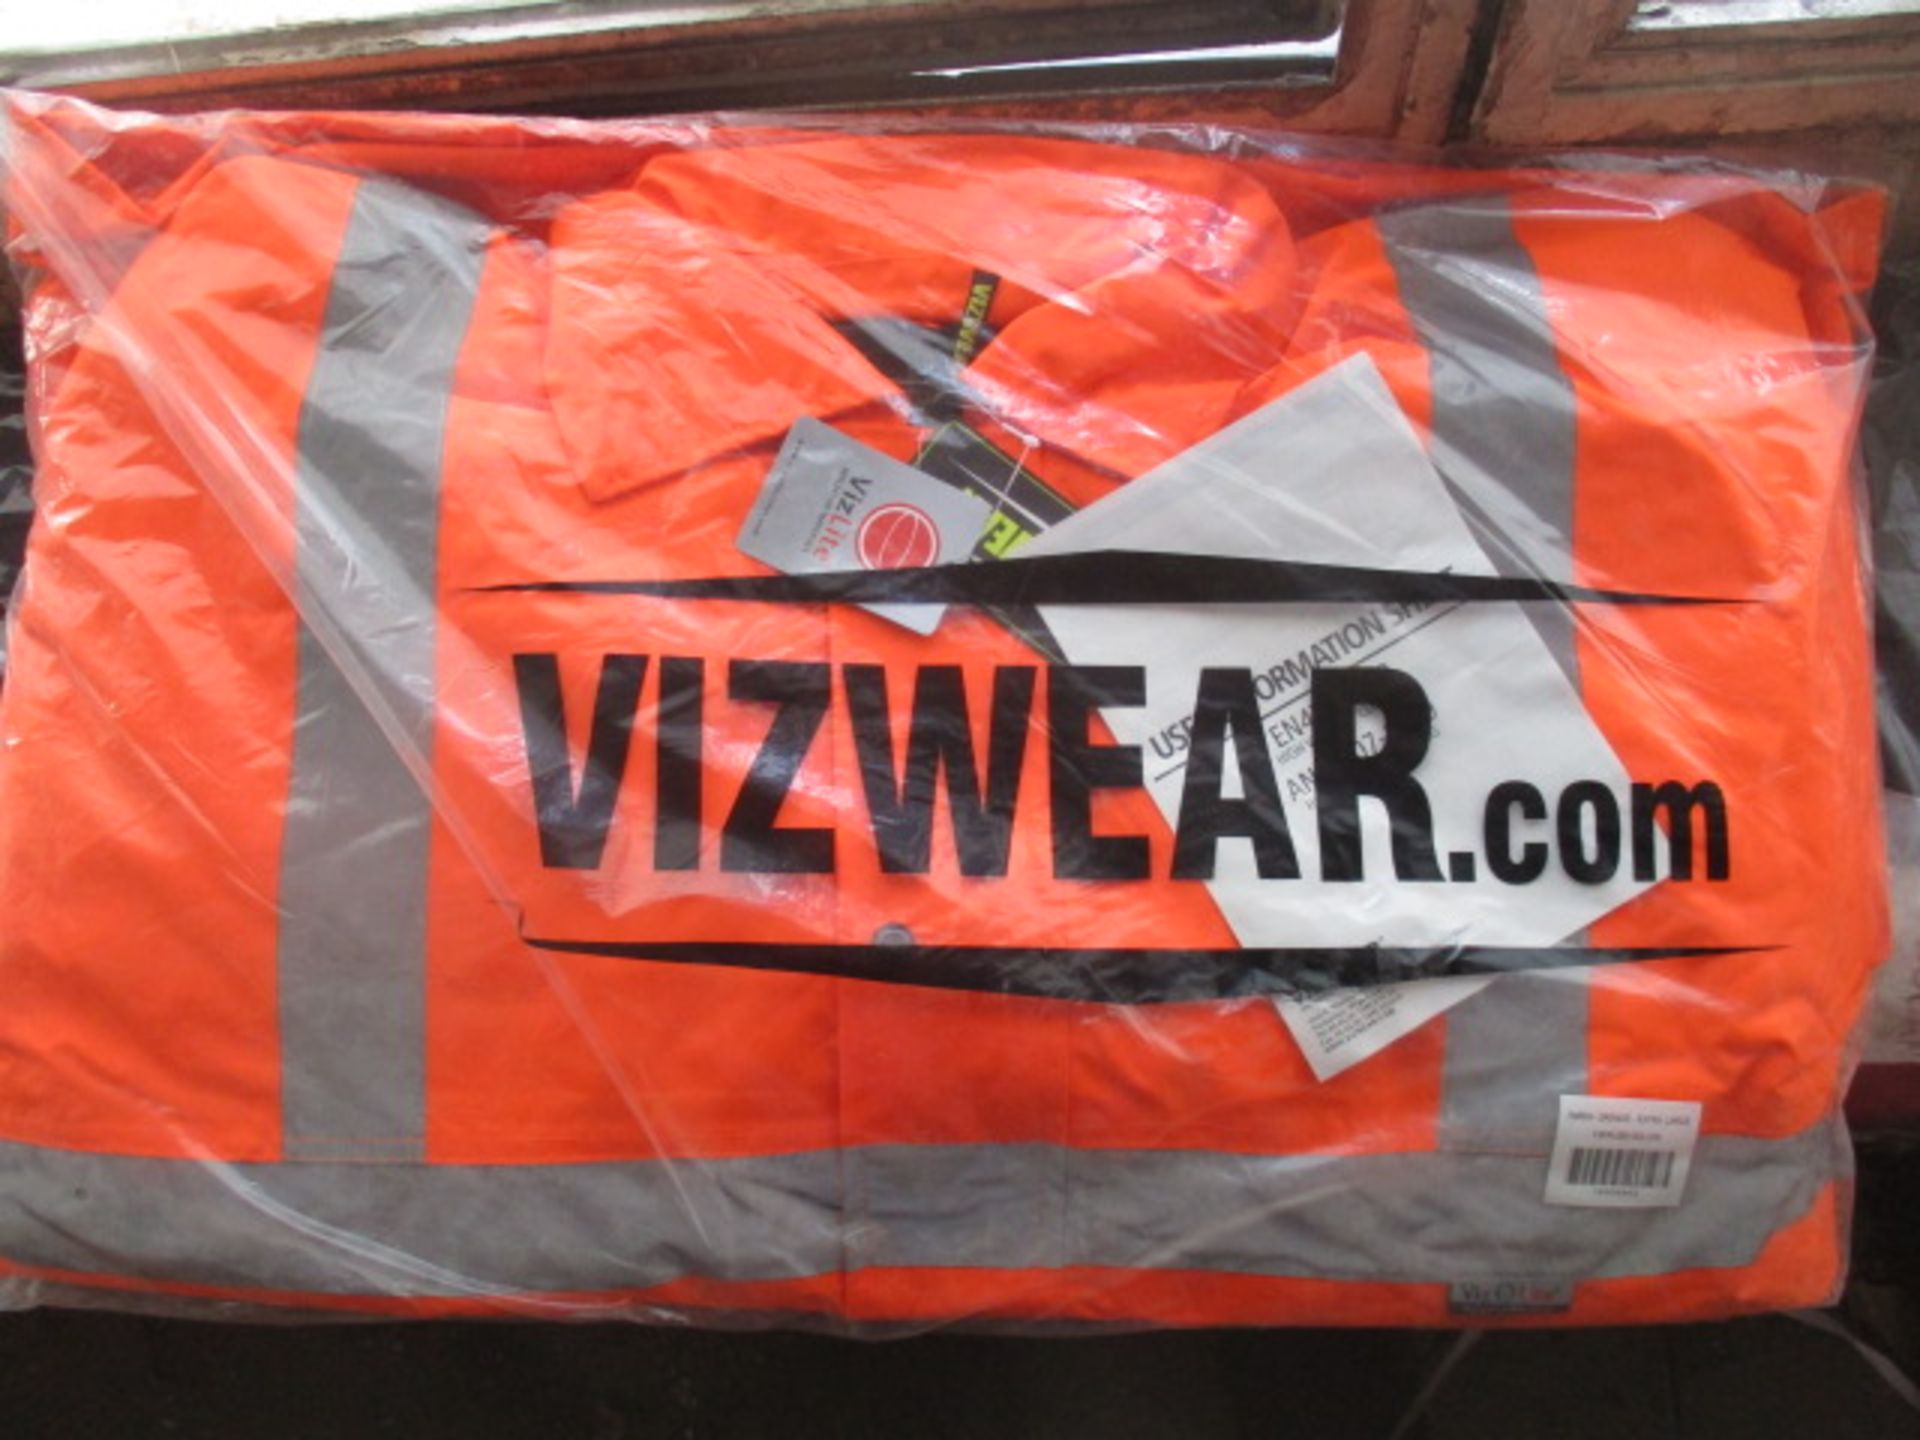 Brand new Hiviz Parka Jacket size 2XL - HiViz sealed in brand new packaging